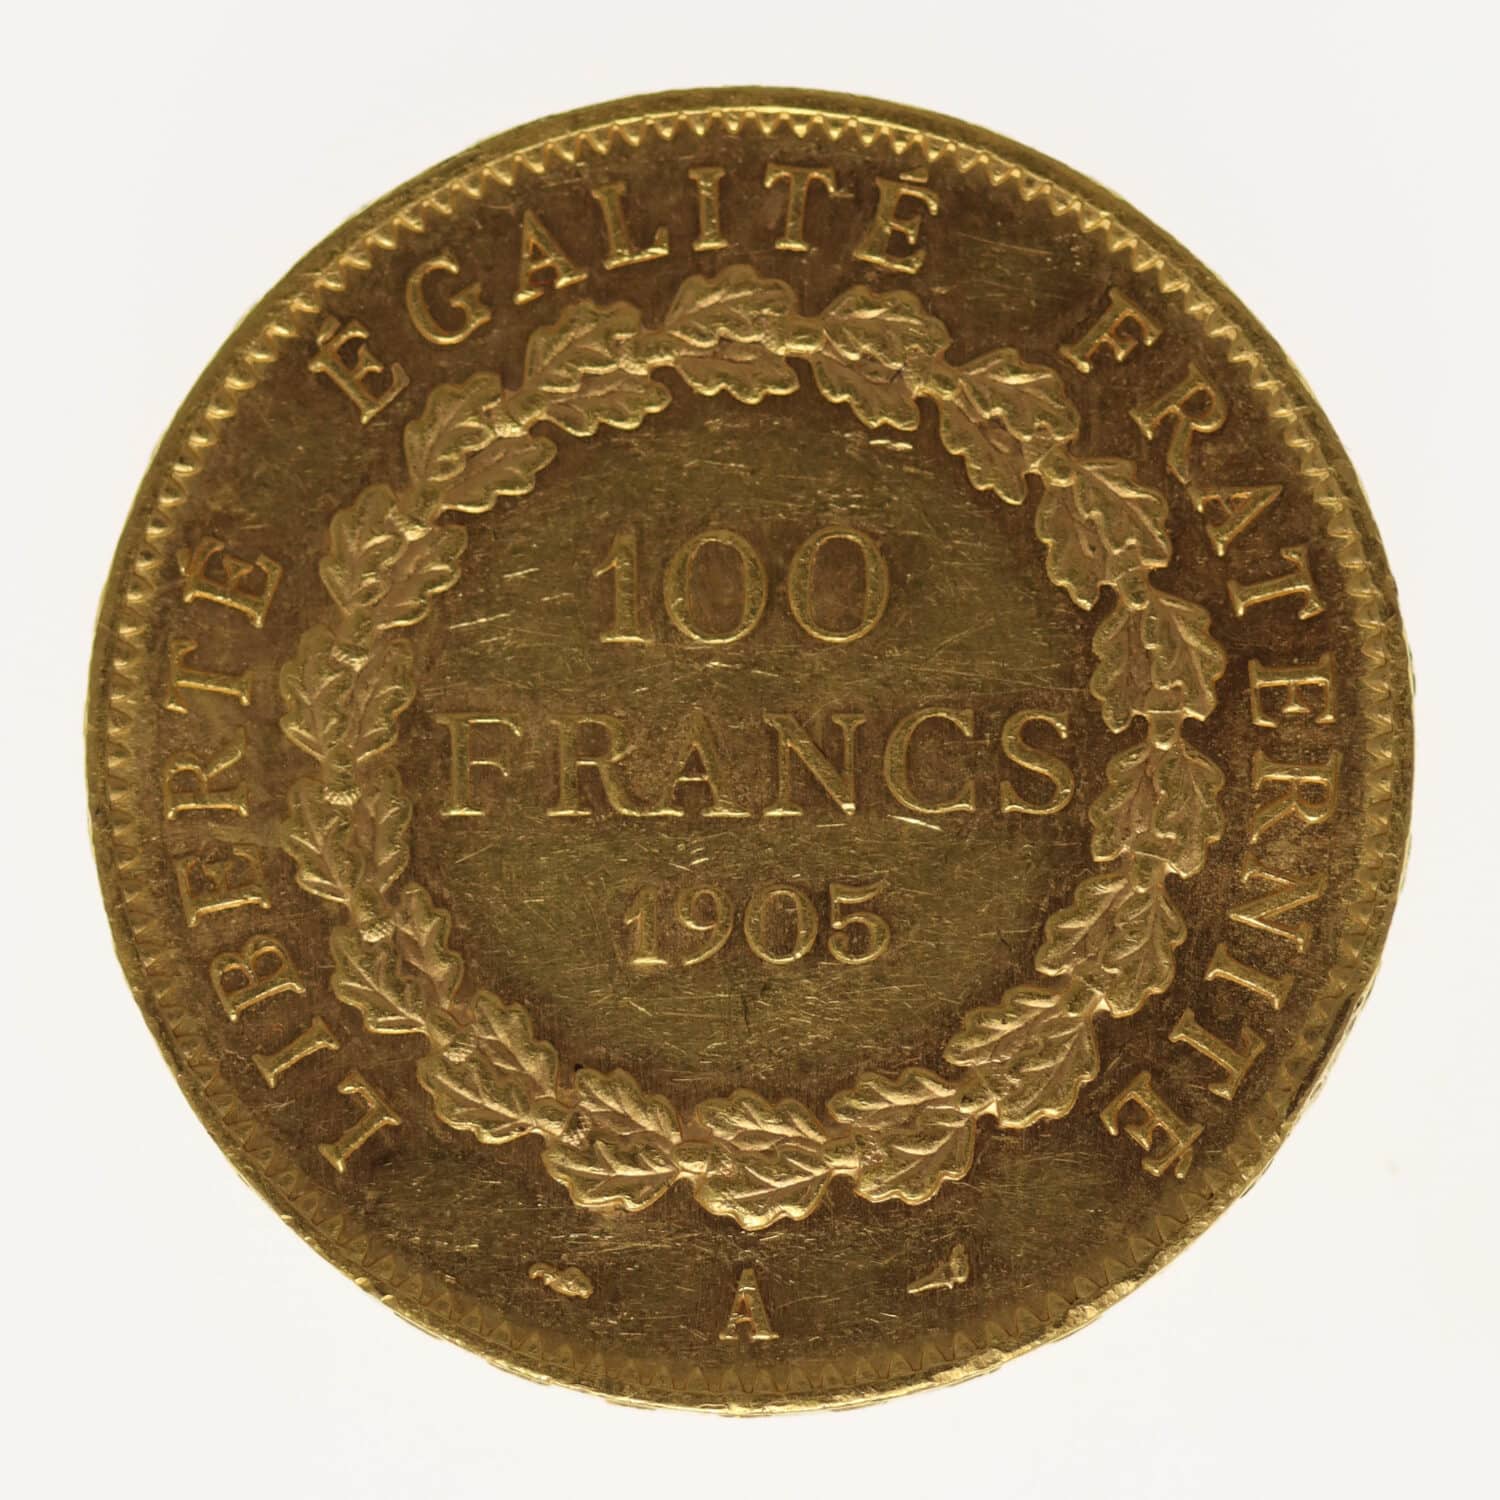 proaurum-frankreich_100_francs_1905_4580_4